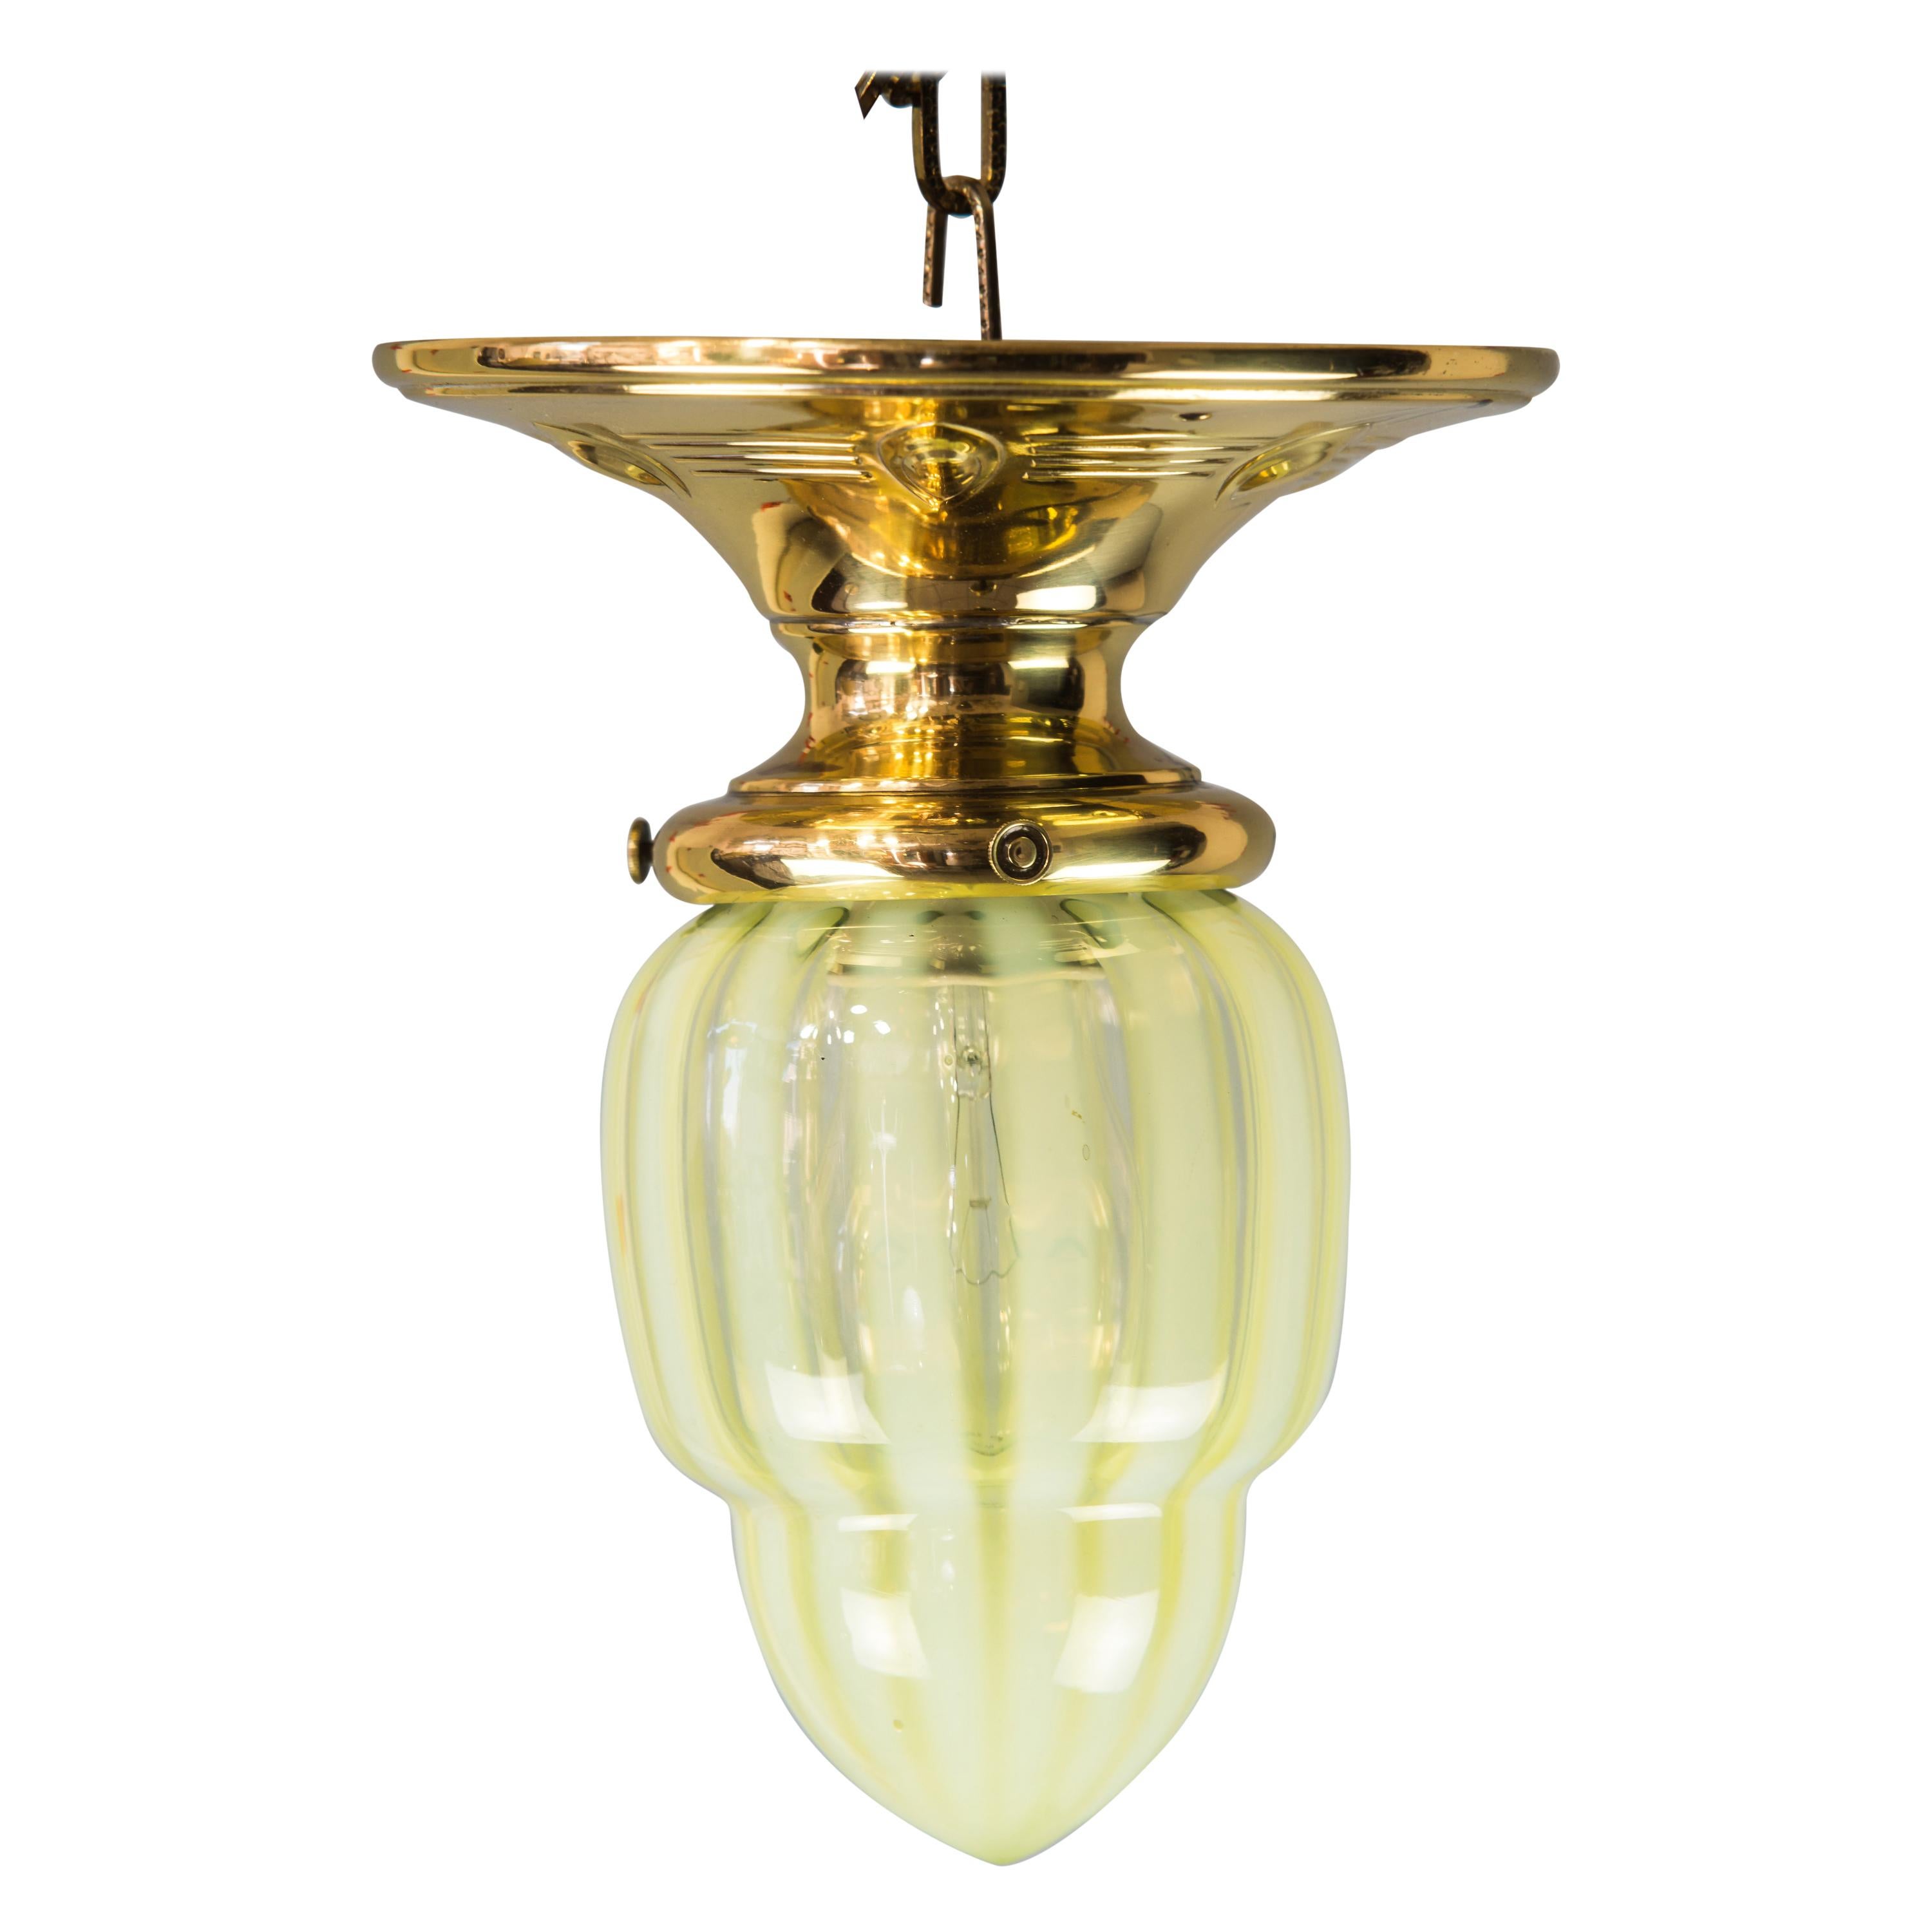 Petite lampe de plafond Jugendstil avec verre opalin jaune/vert d'origine